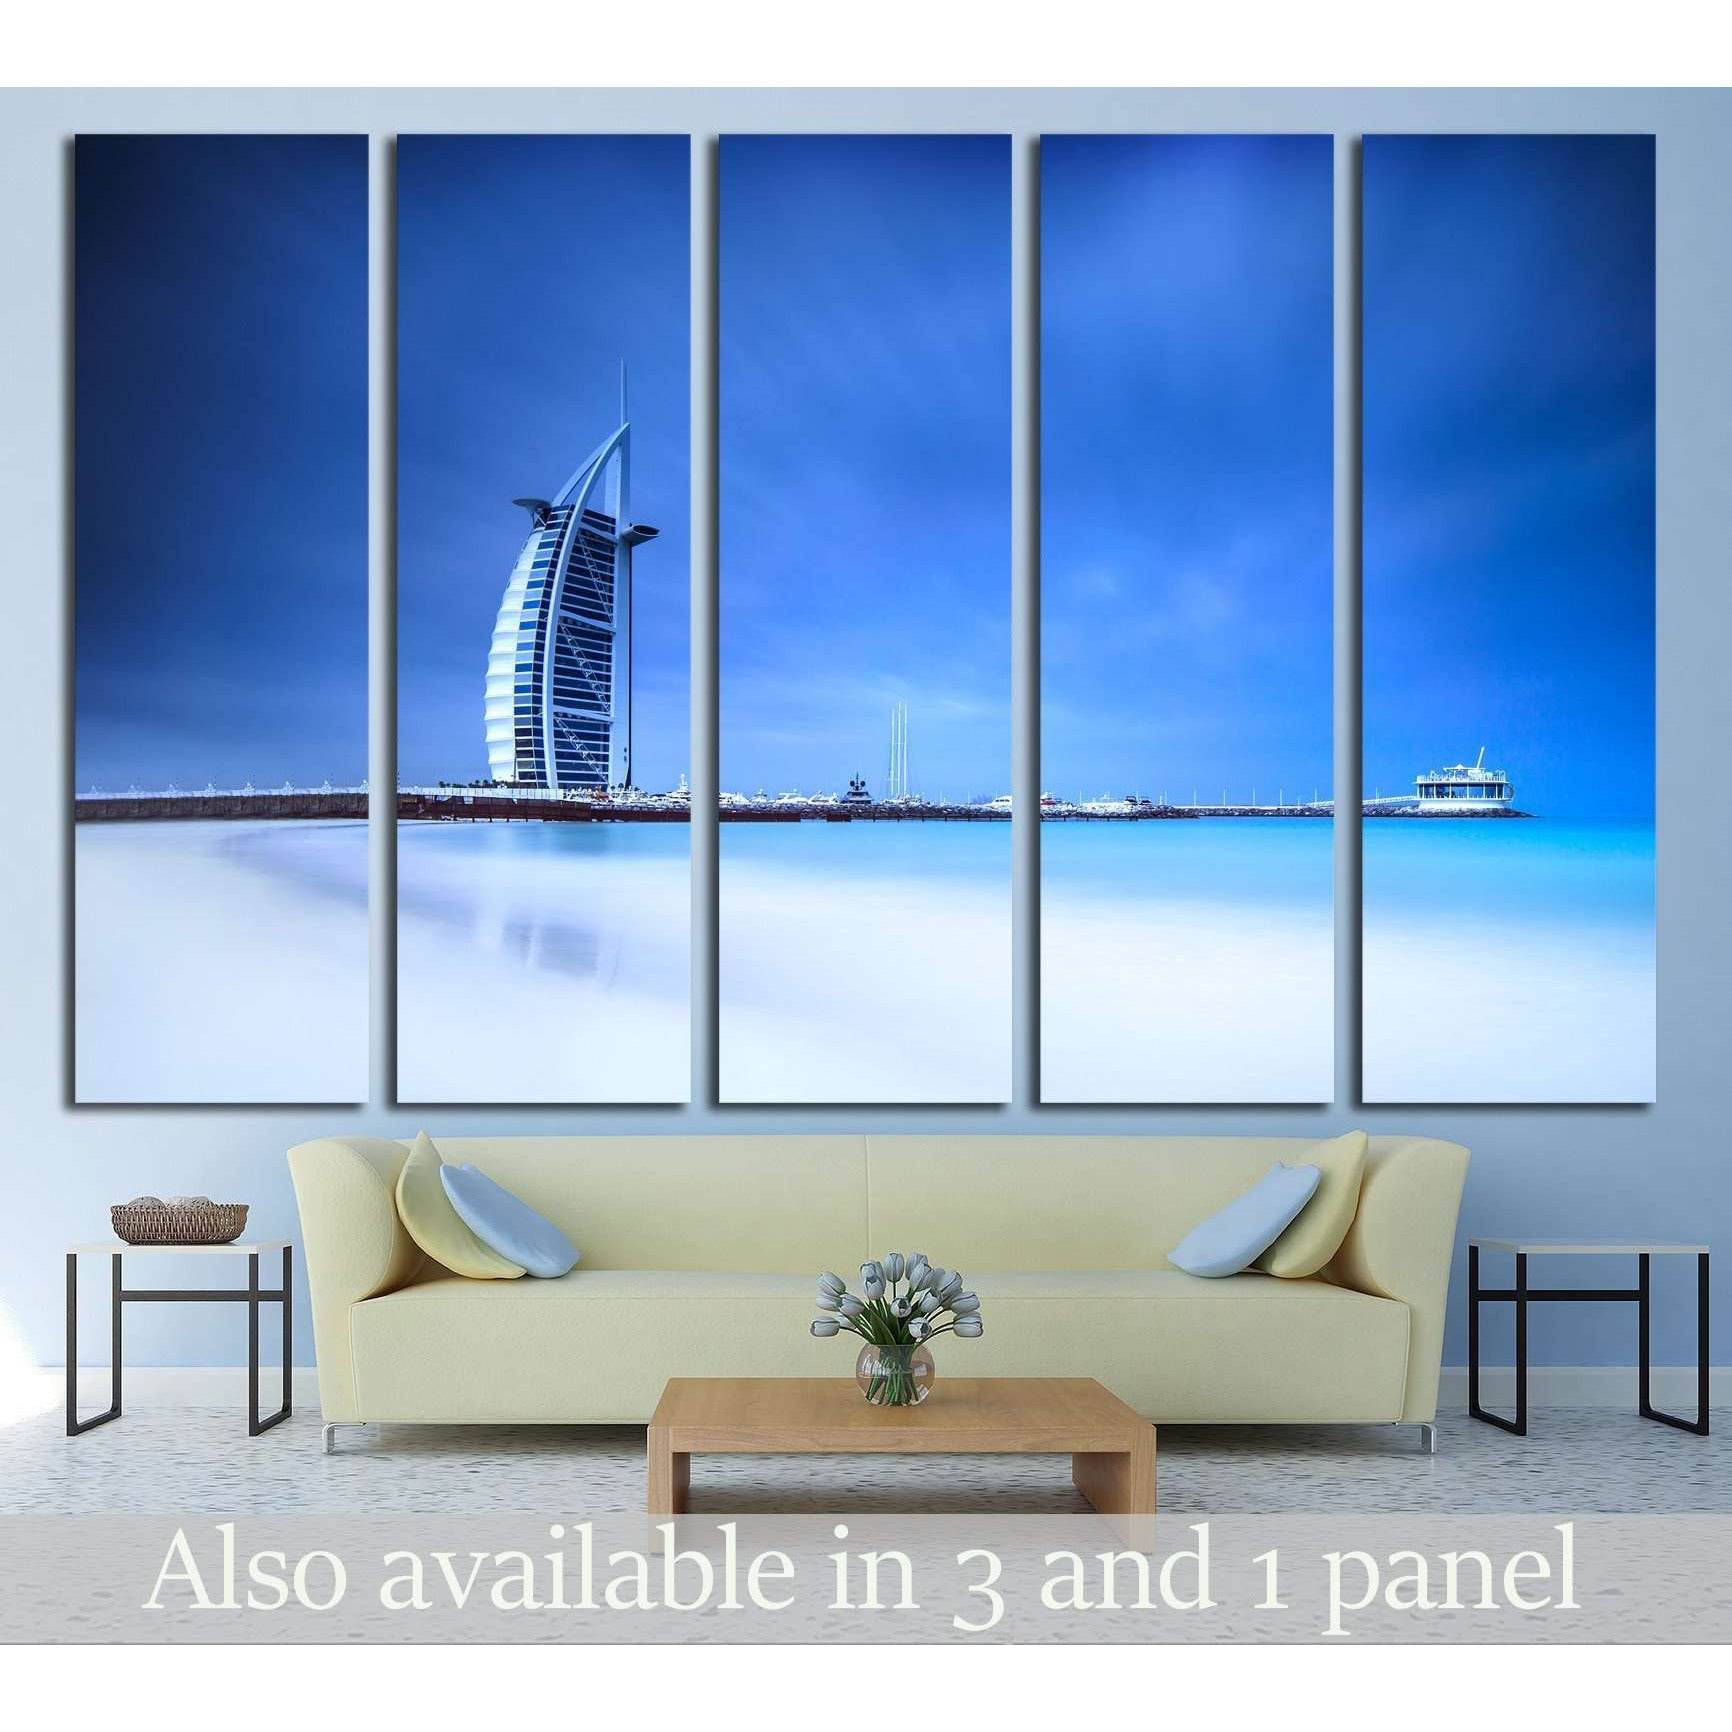 Burj Al Arab hotel on Jumeirah beach in Dubai, modern architecture, luxury beach resort, summer vacation and tourism concept №2268 Ready to Hang Canvas Print